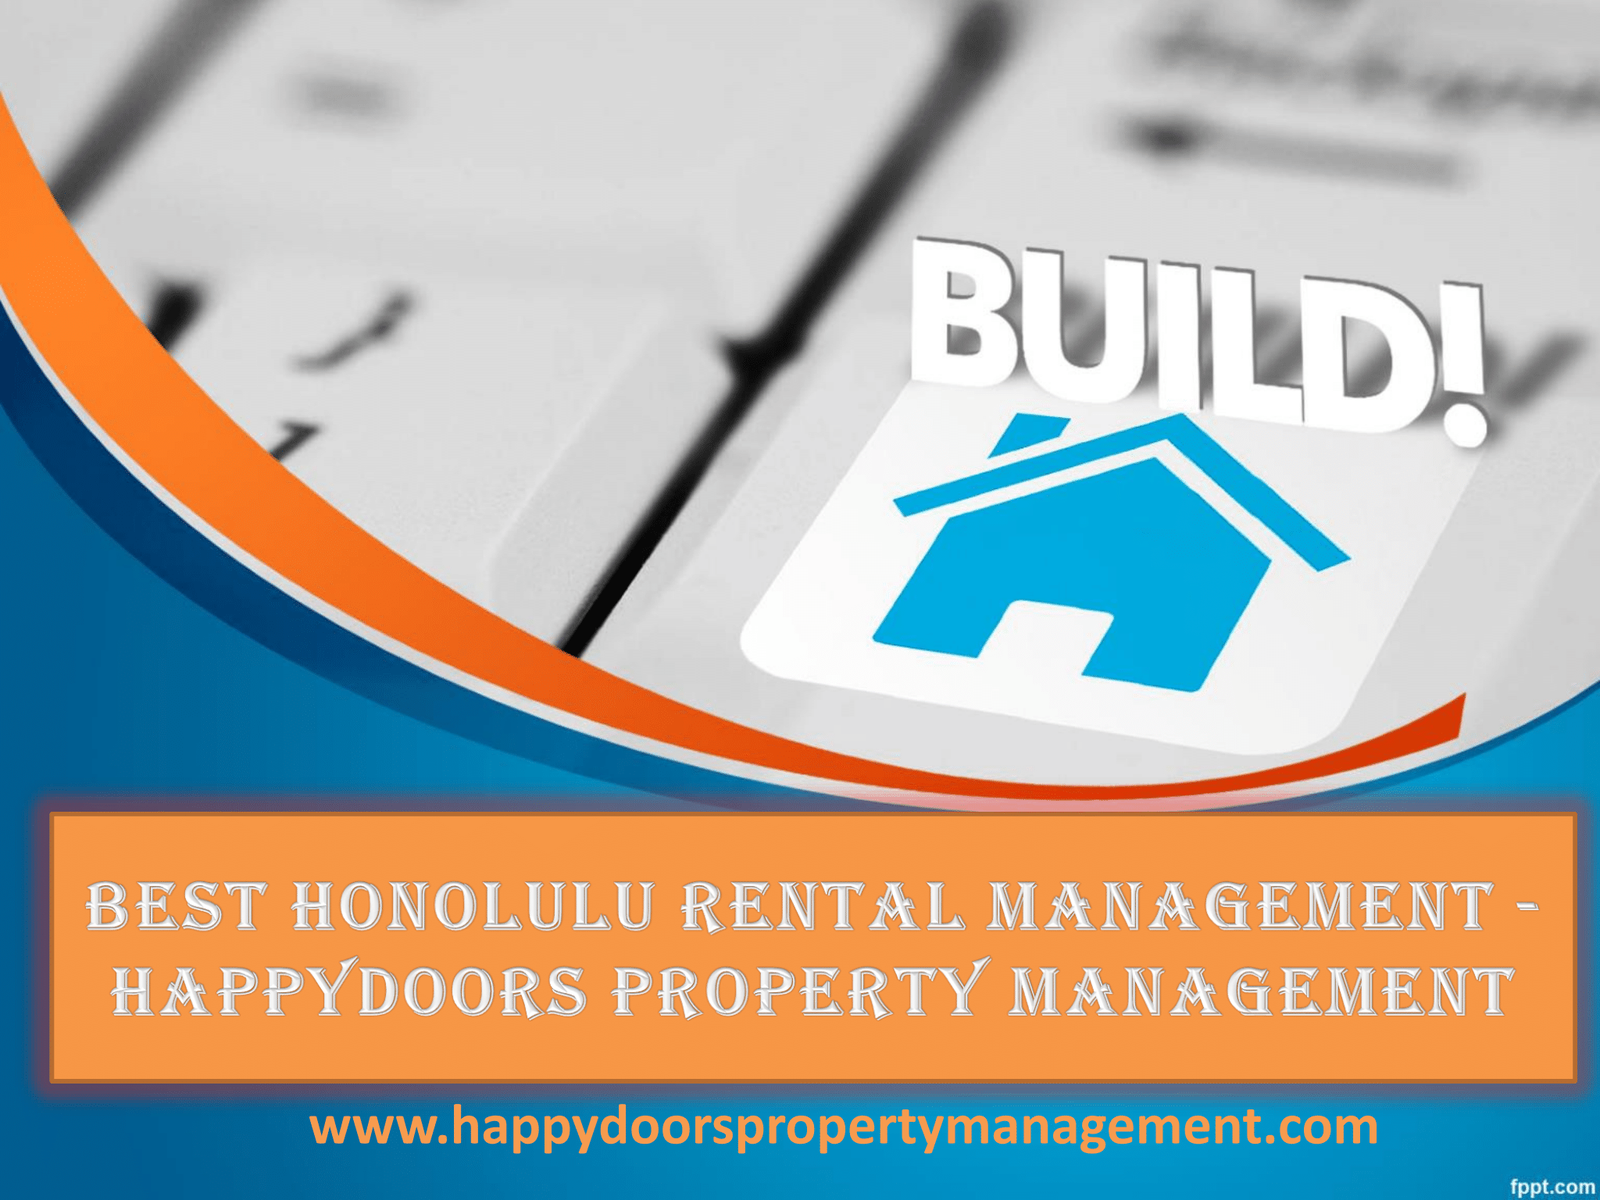 Dropbox - Best Honolulu Rental Management - HappyDoors Property Management.pptx